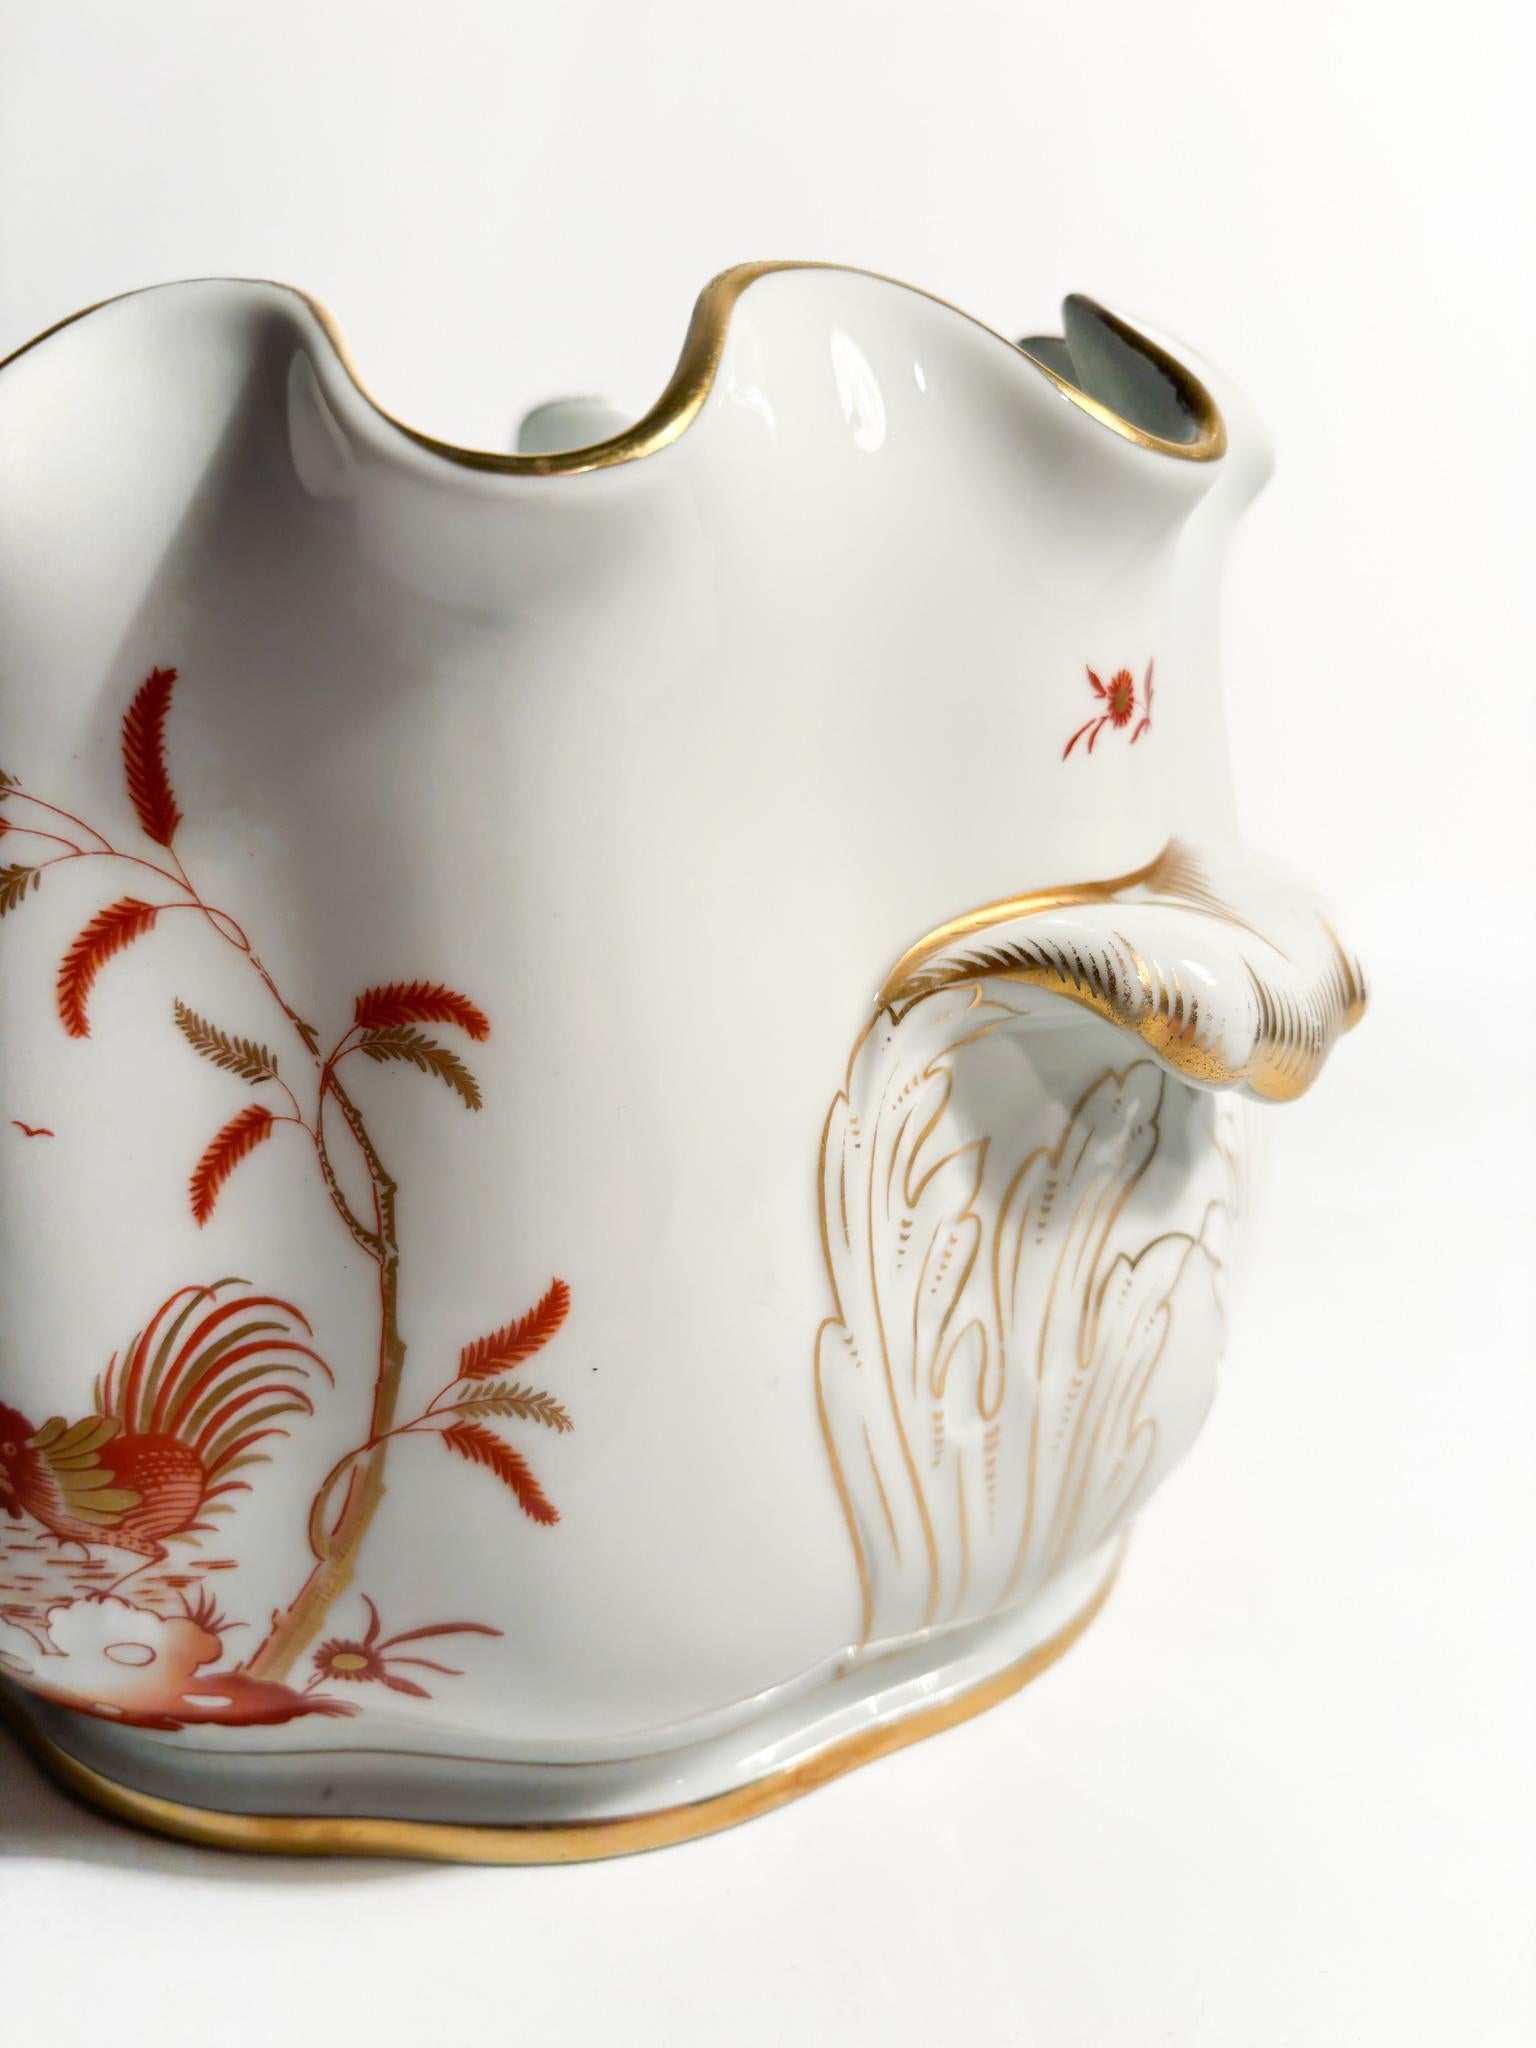 Ginori Doccia Porcelain Refresher Vase Galli Rossi Series 1950s For Sale 3